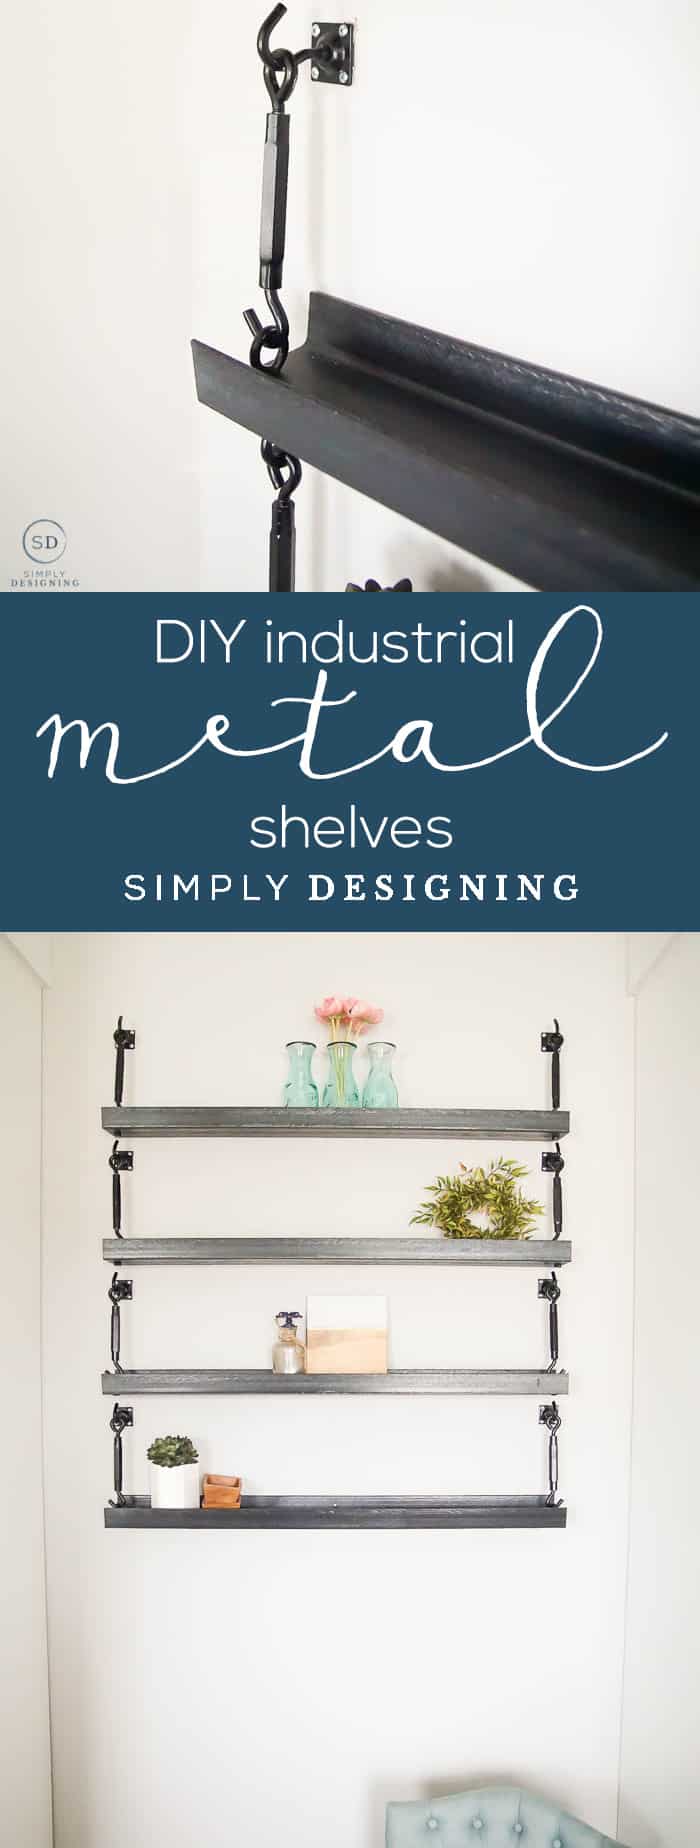 How to Make Industrial Metal Shelves - DIY Industrial Metal Shelves - DIY Metal Shelves